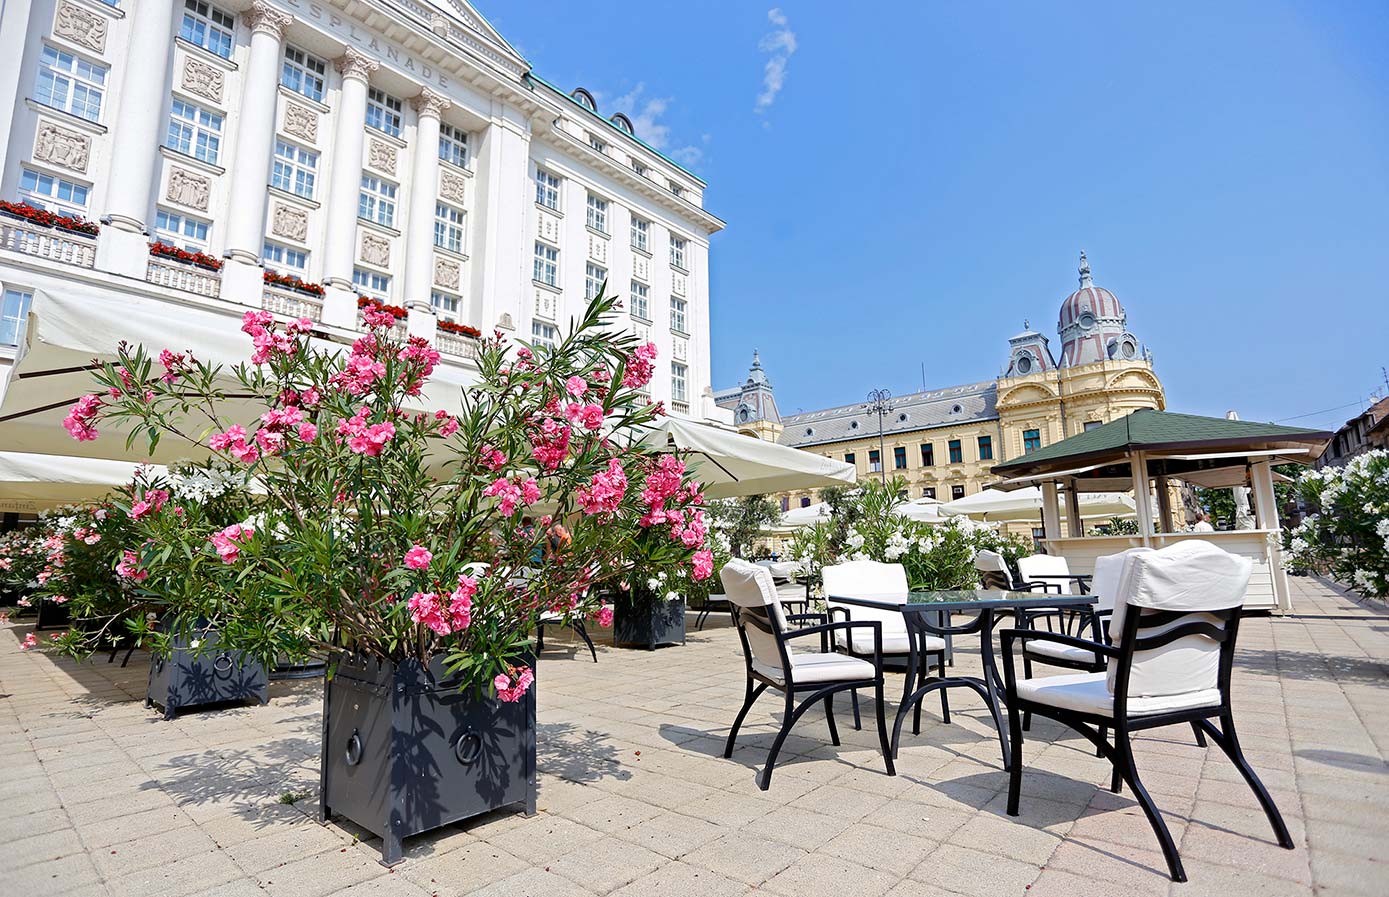 Terasa Oleander, hotel Esplanade u Zagrebu, deo terase koja se prostire na 1.000 kvadratnih metara (Foto: Arhiva hotela Esplanade)